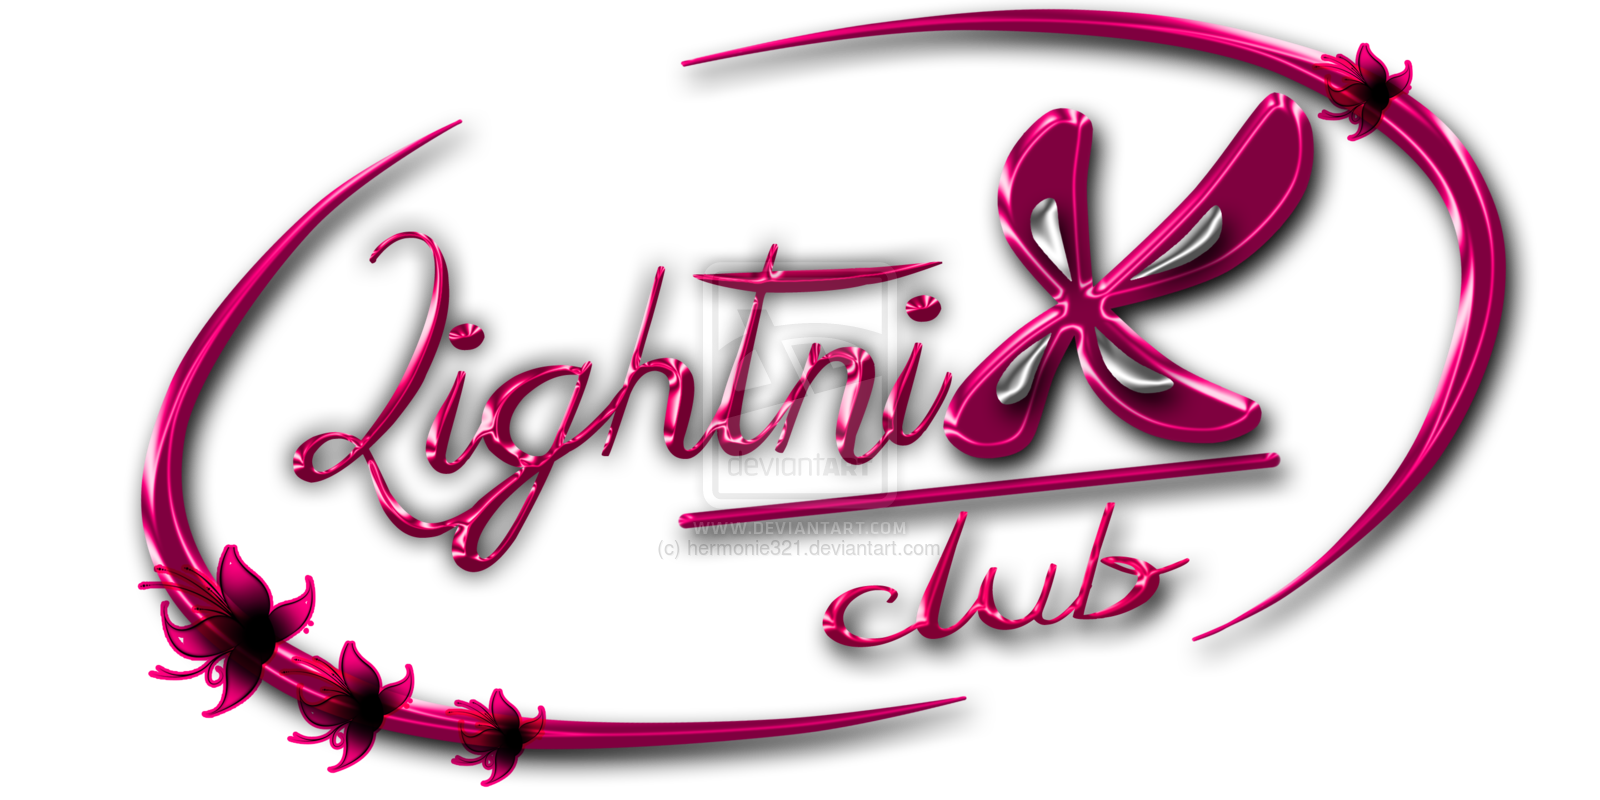 Bad Girls Club Logo Wallpaper Lightnix club logo by